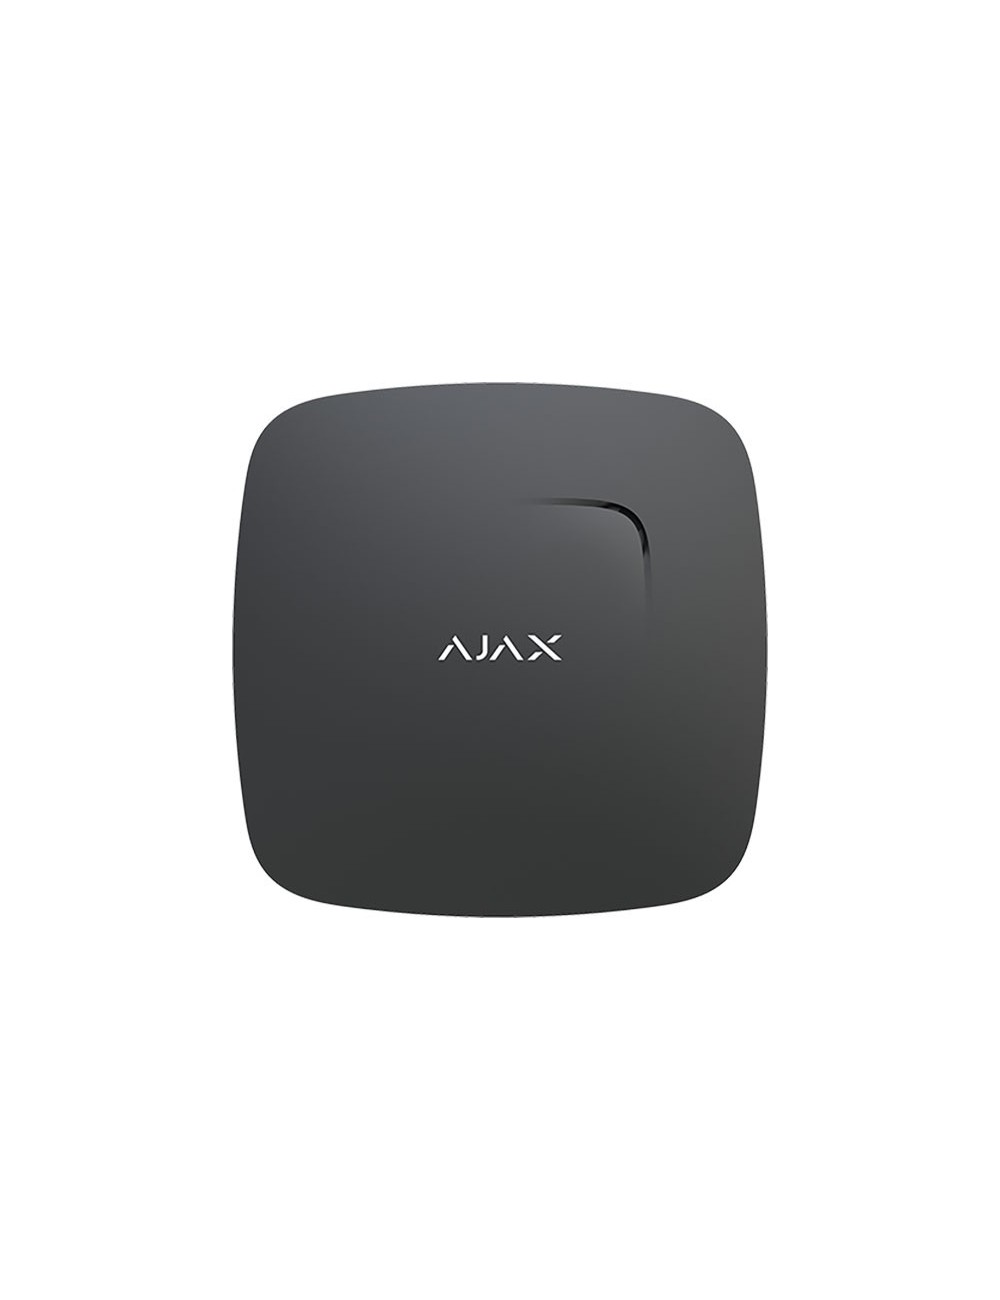 Wireless fire detector sensor Plus via radio wireless Ajax black